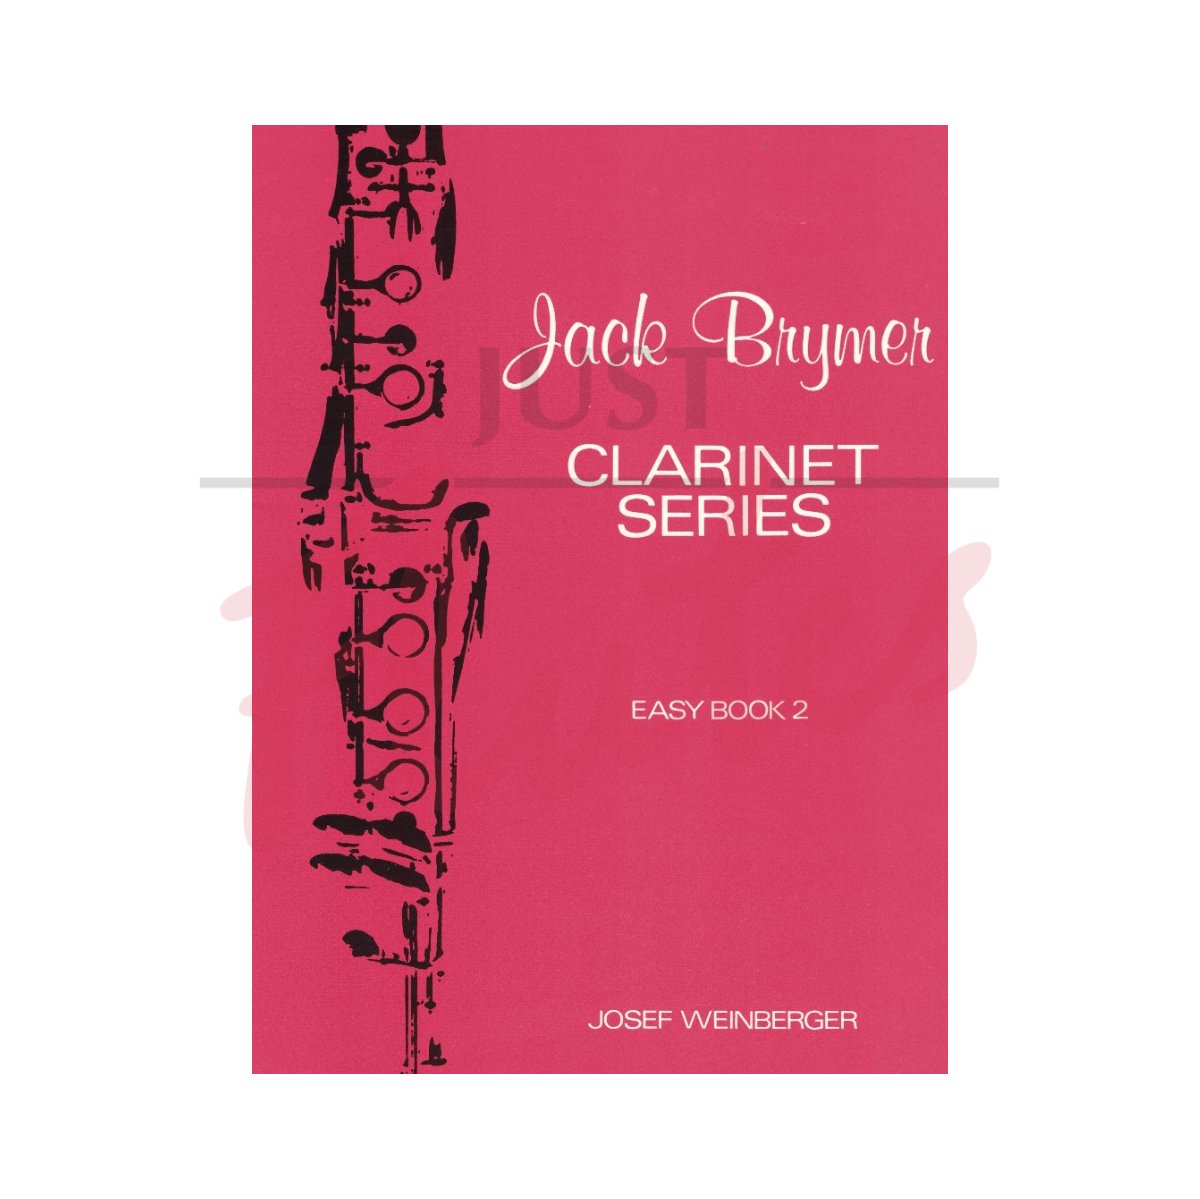 Clarinet Series Easy Book 2